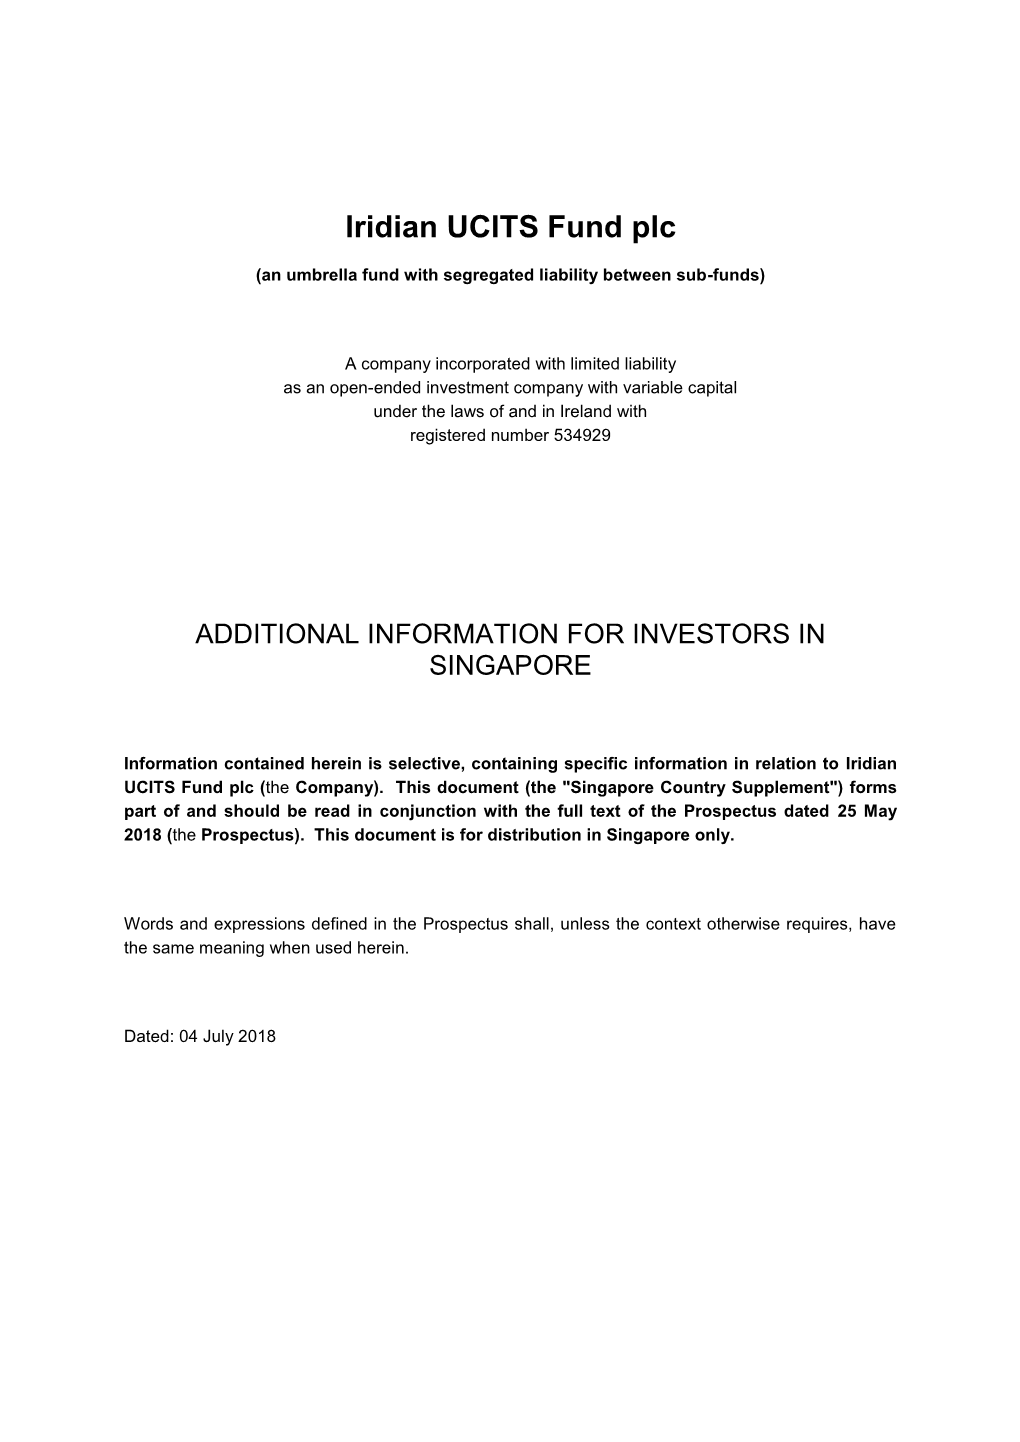 Iridian UCITS Fund Plc